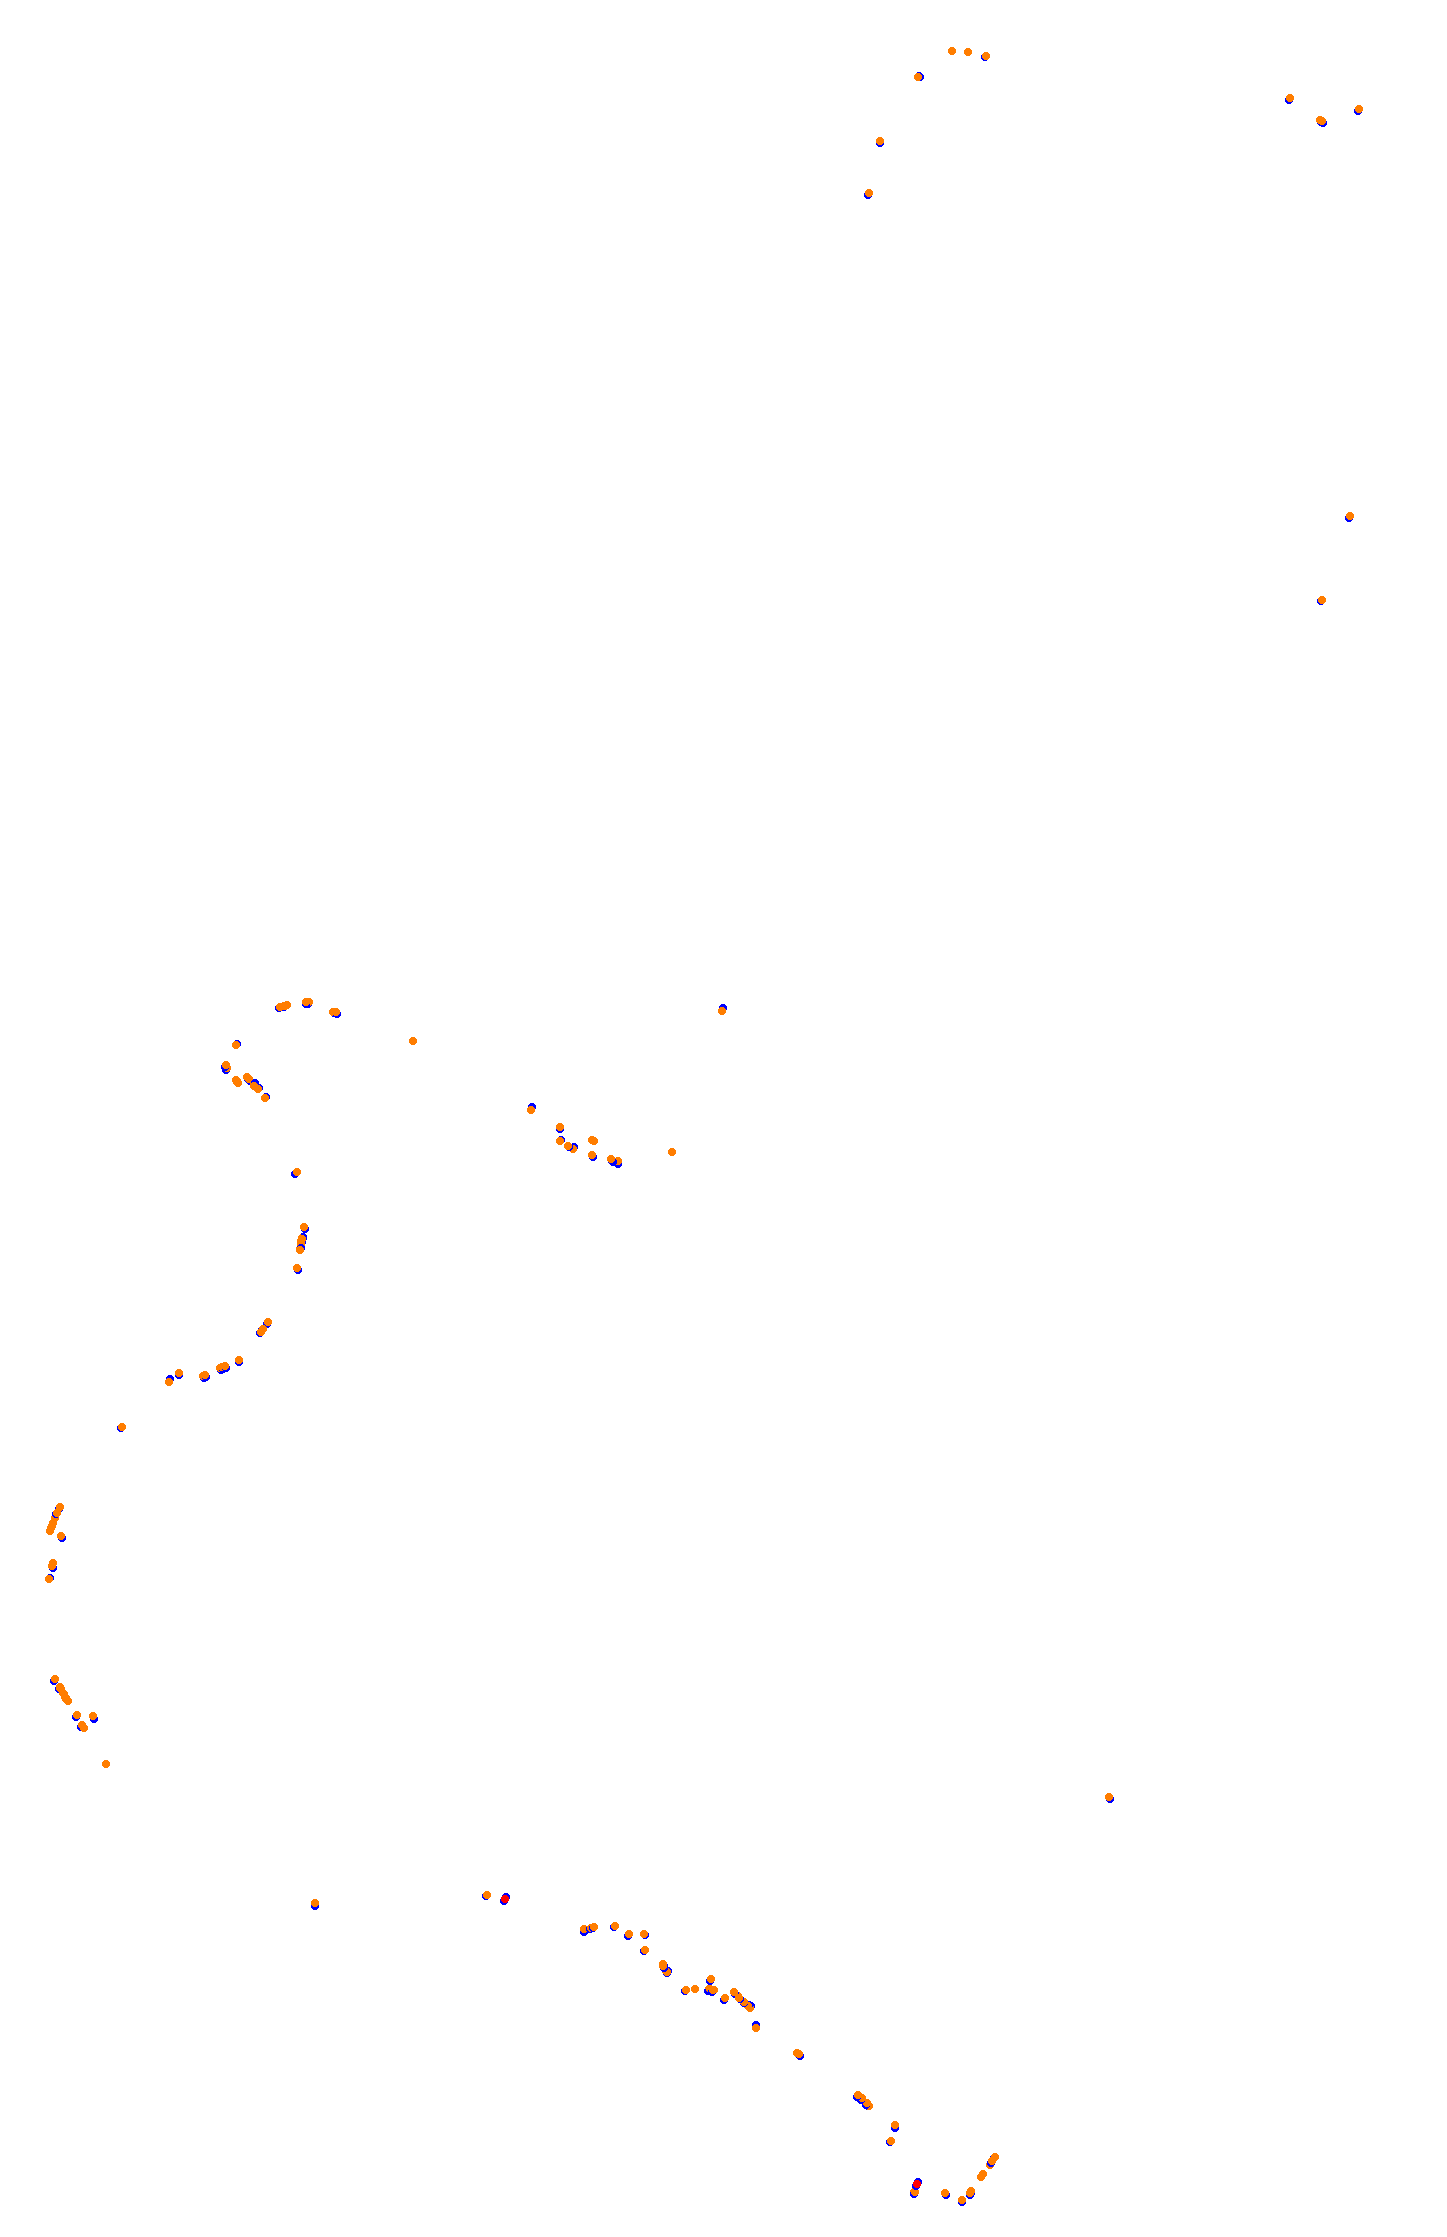 Bathurst (Mount Panorama) collisions